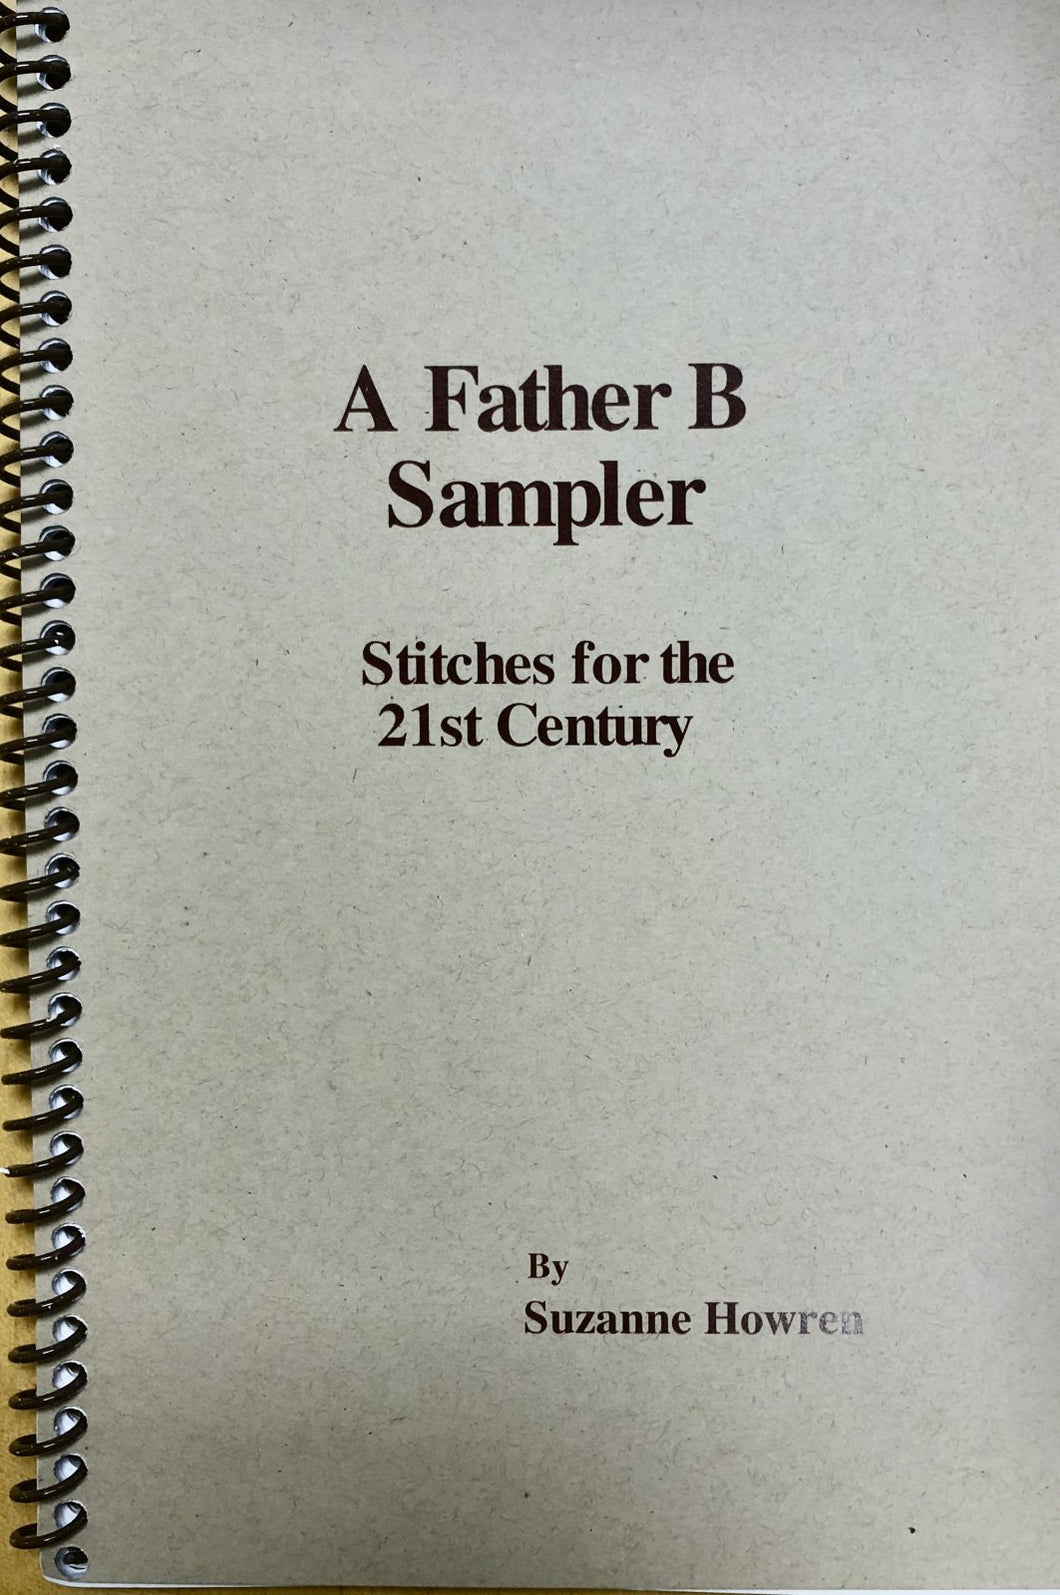 father b sampler